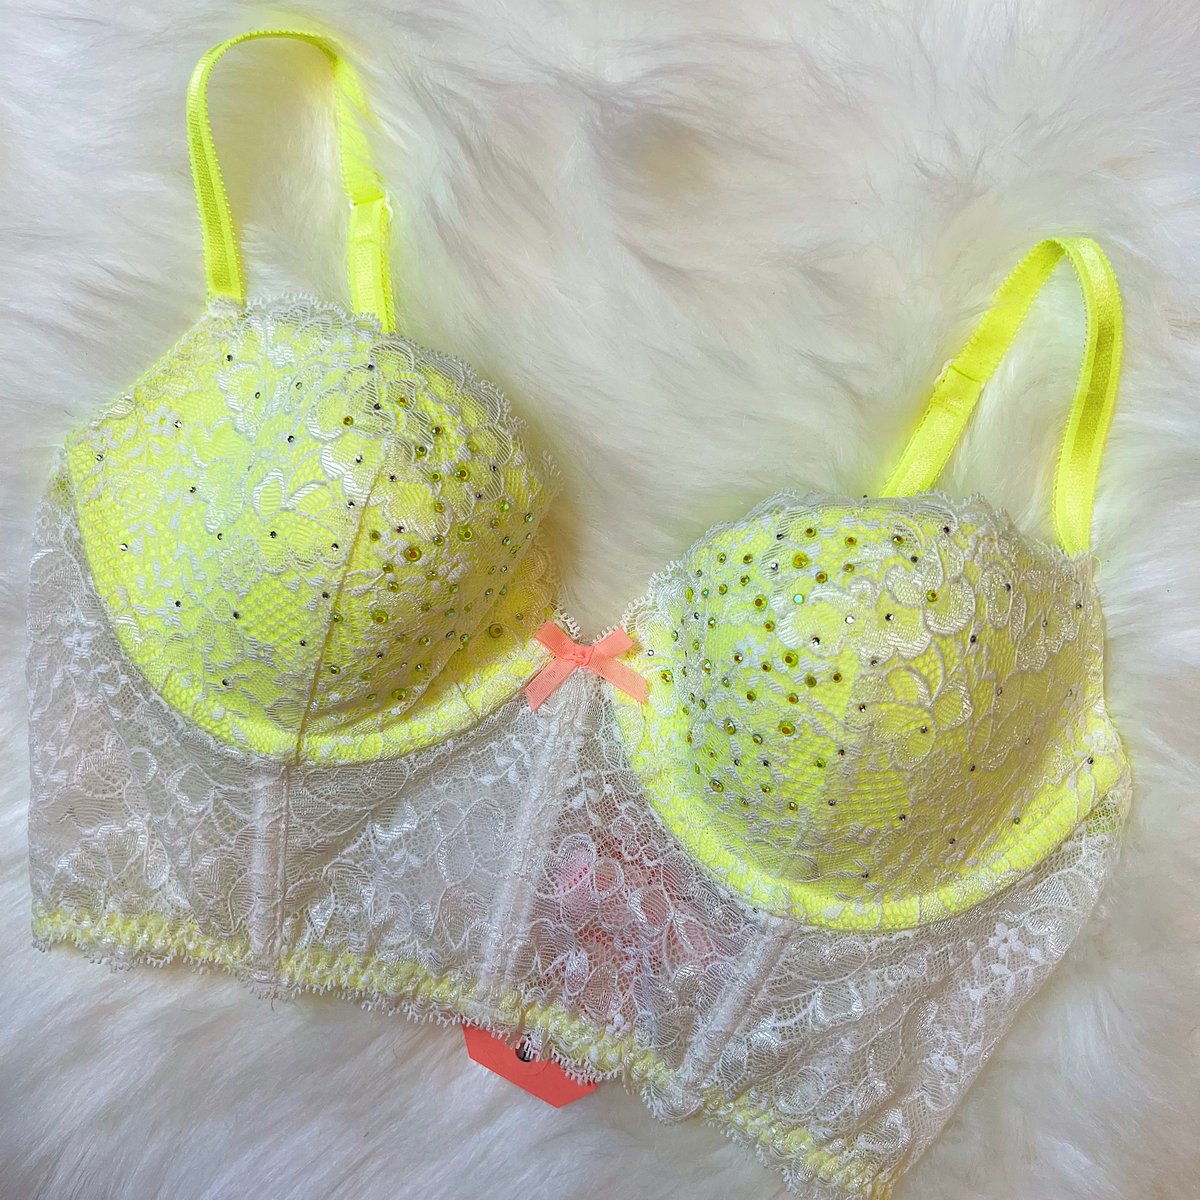 Dream Angela bra size 32d Victoria's Secret